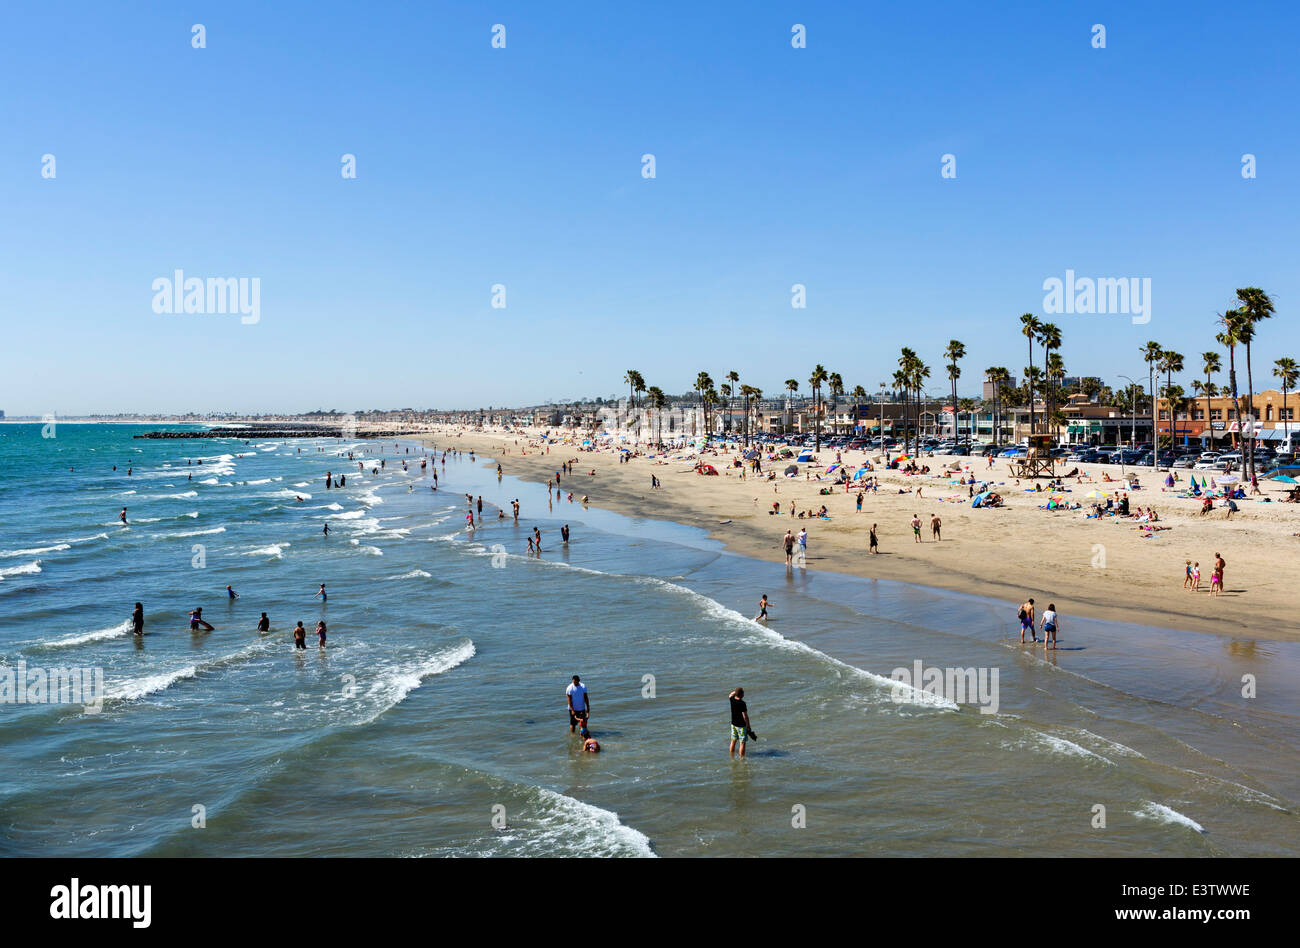 The beach at Newport Beach from the pier, Orange County, California, USA Stock Photo